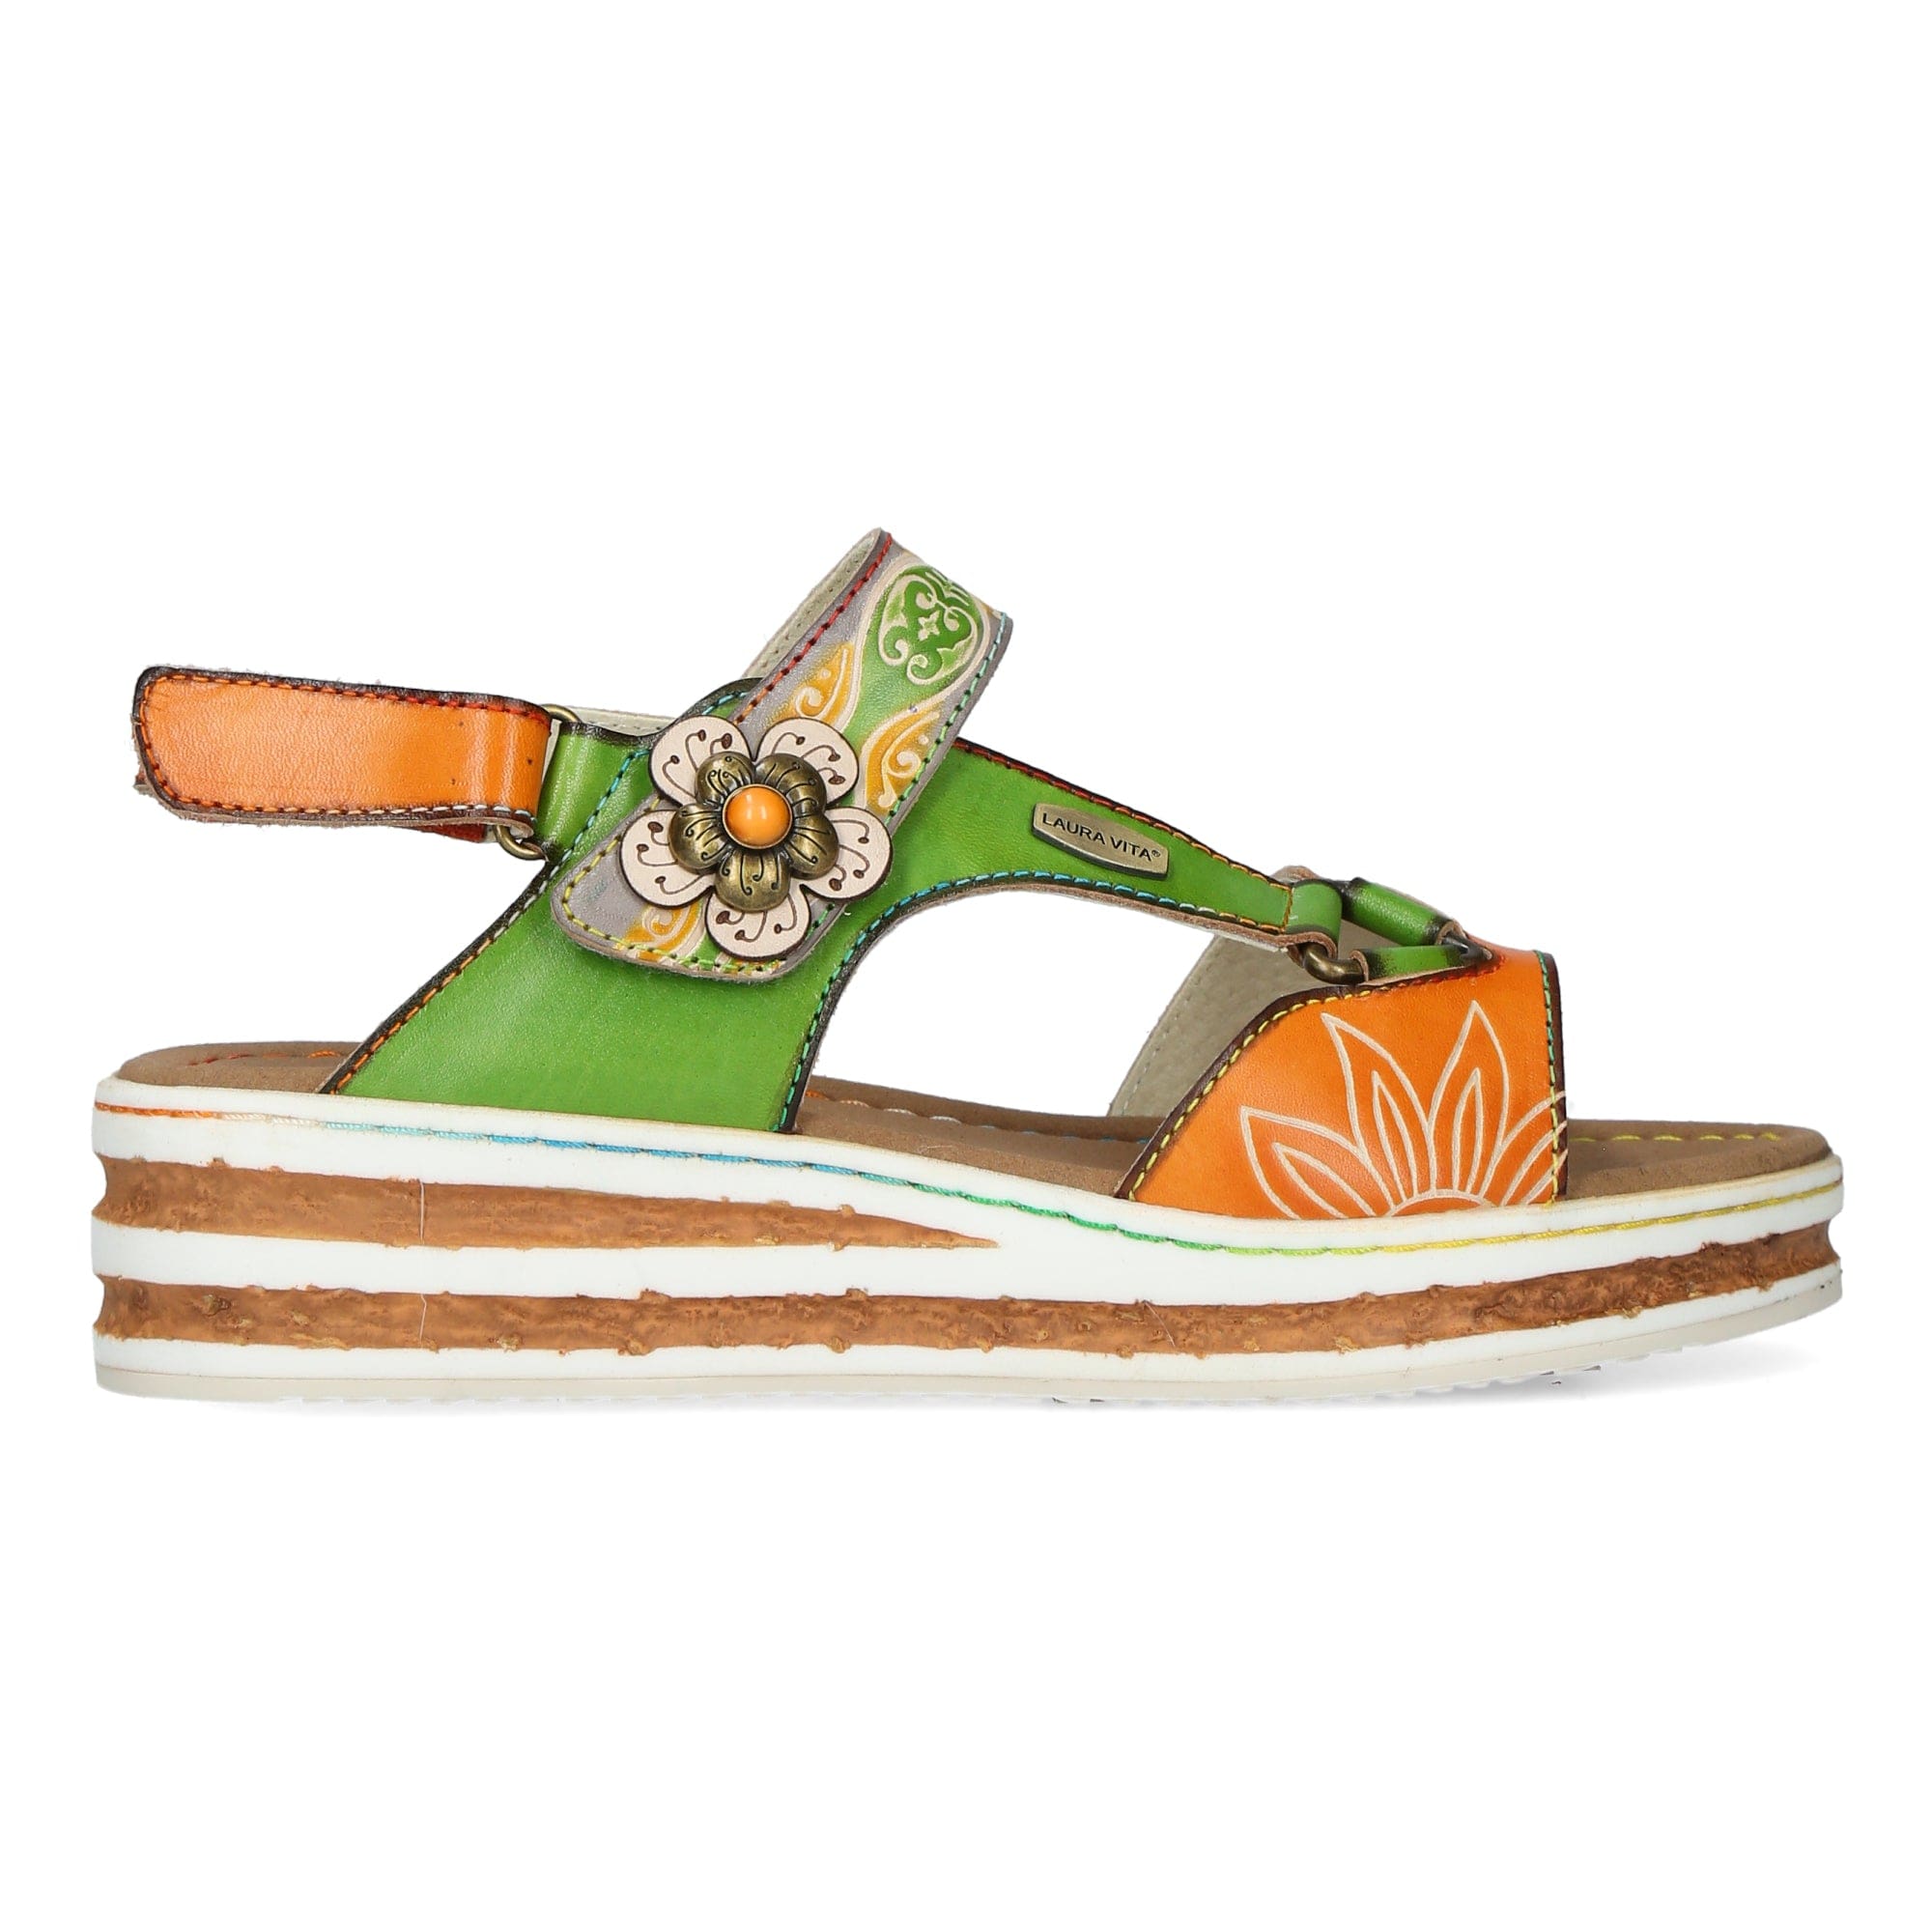 Chaussure DICEZEO 0623 - 35 / Vert - Sandale